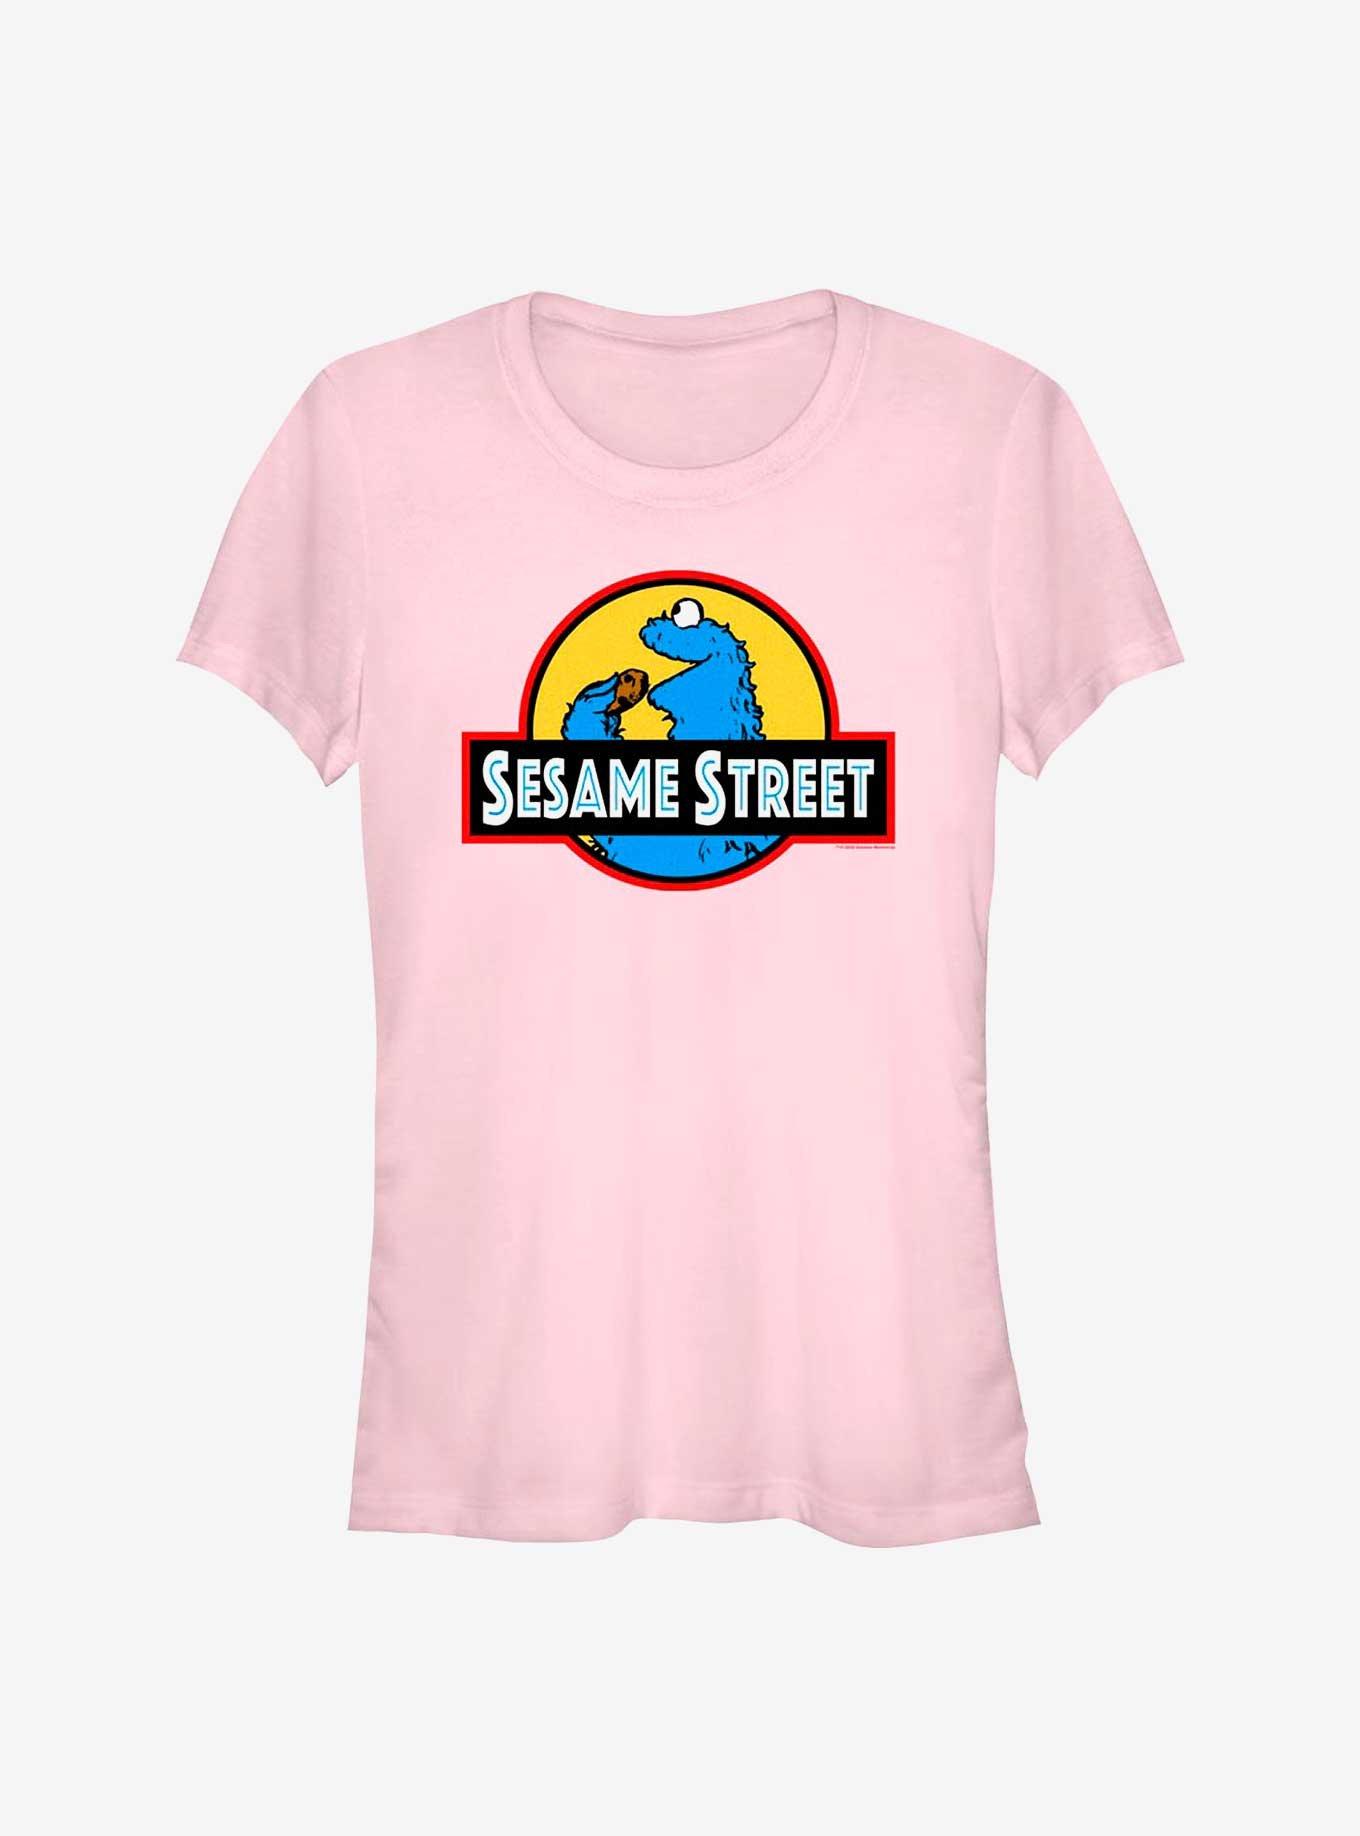 2XL 123 Sesame Street Cookie Monster S/S T-Shirt,Green w/Red